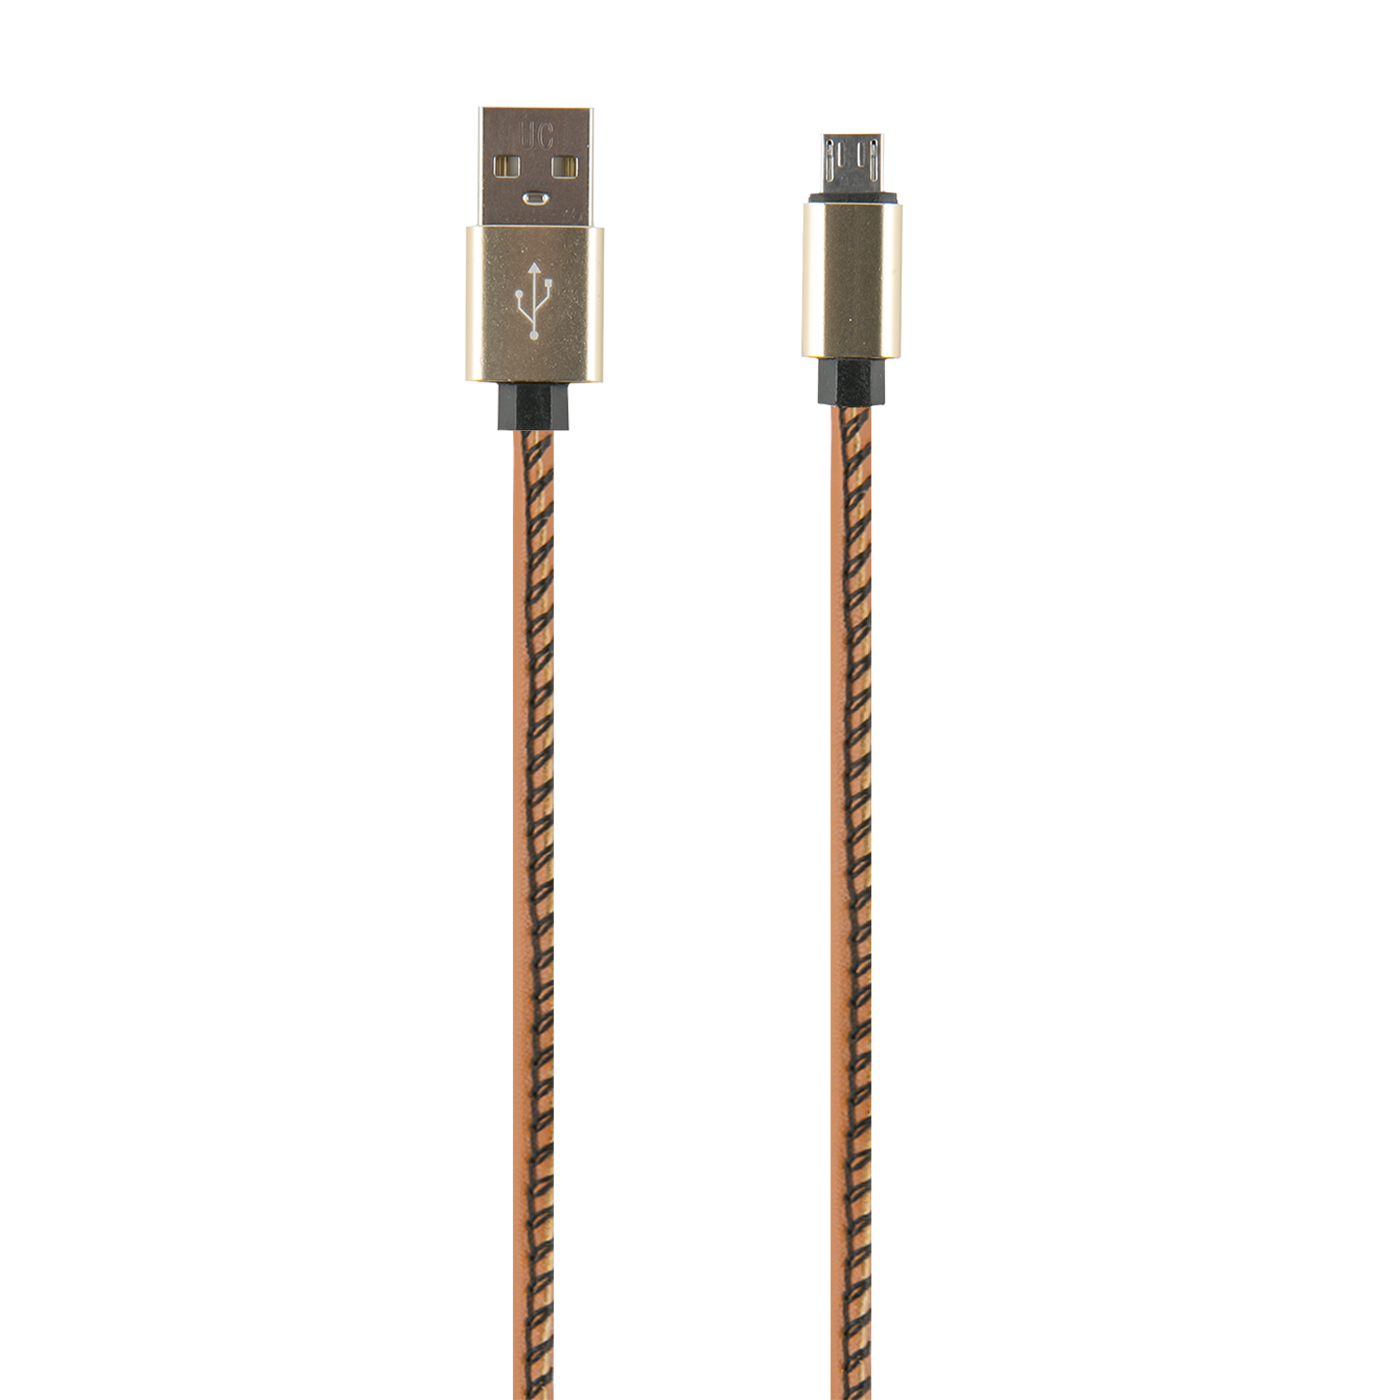 Дата-кабель Red Line USB - micro USB (2 метра) оплетка "экокожа"